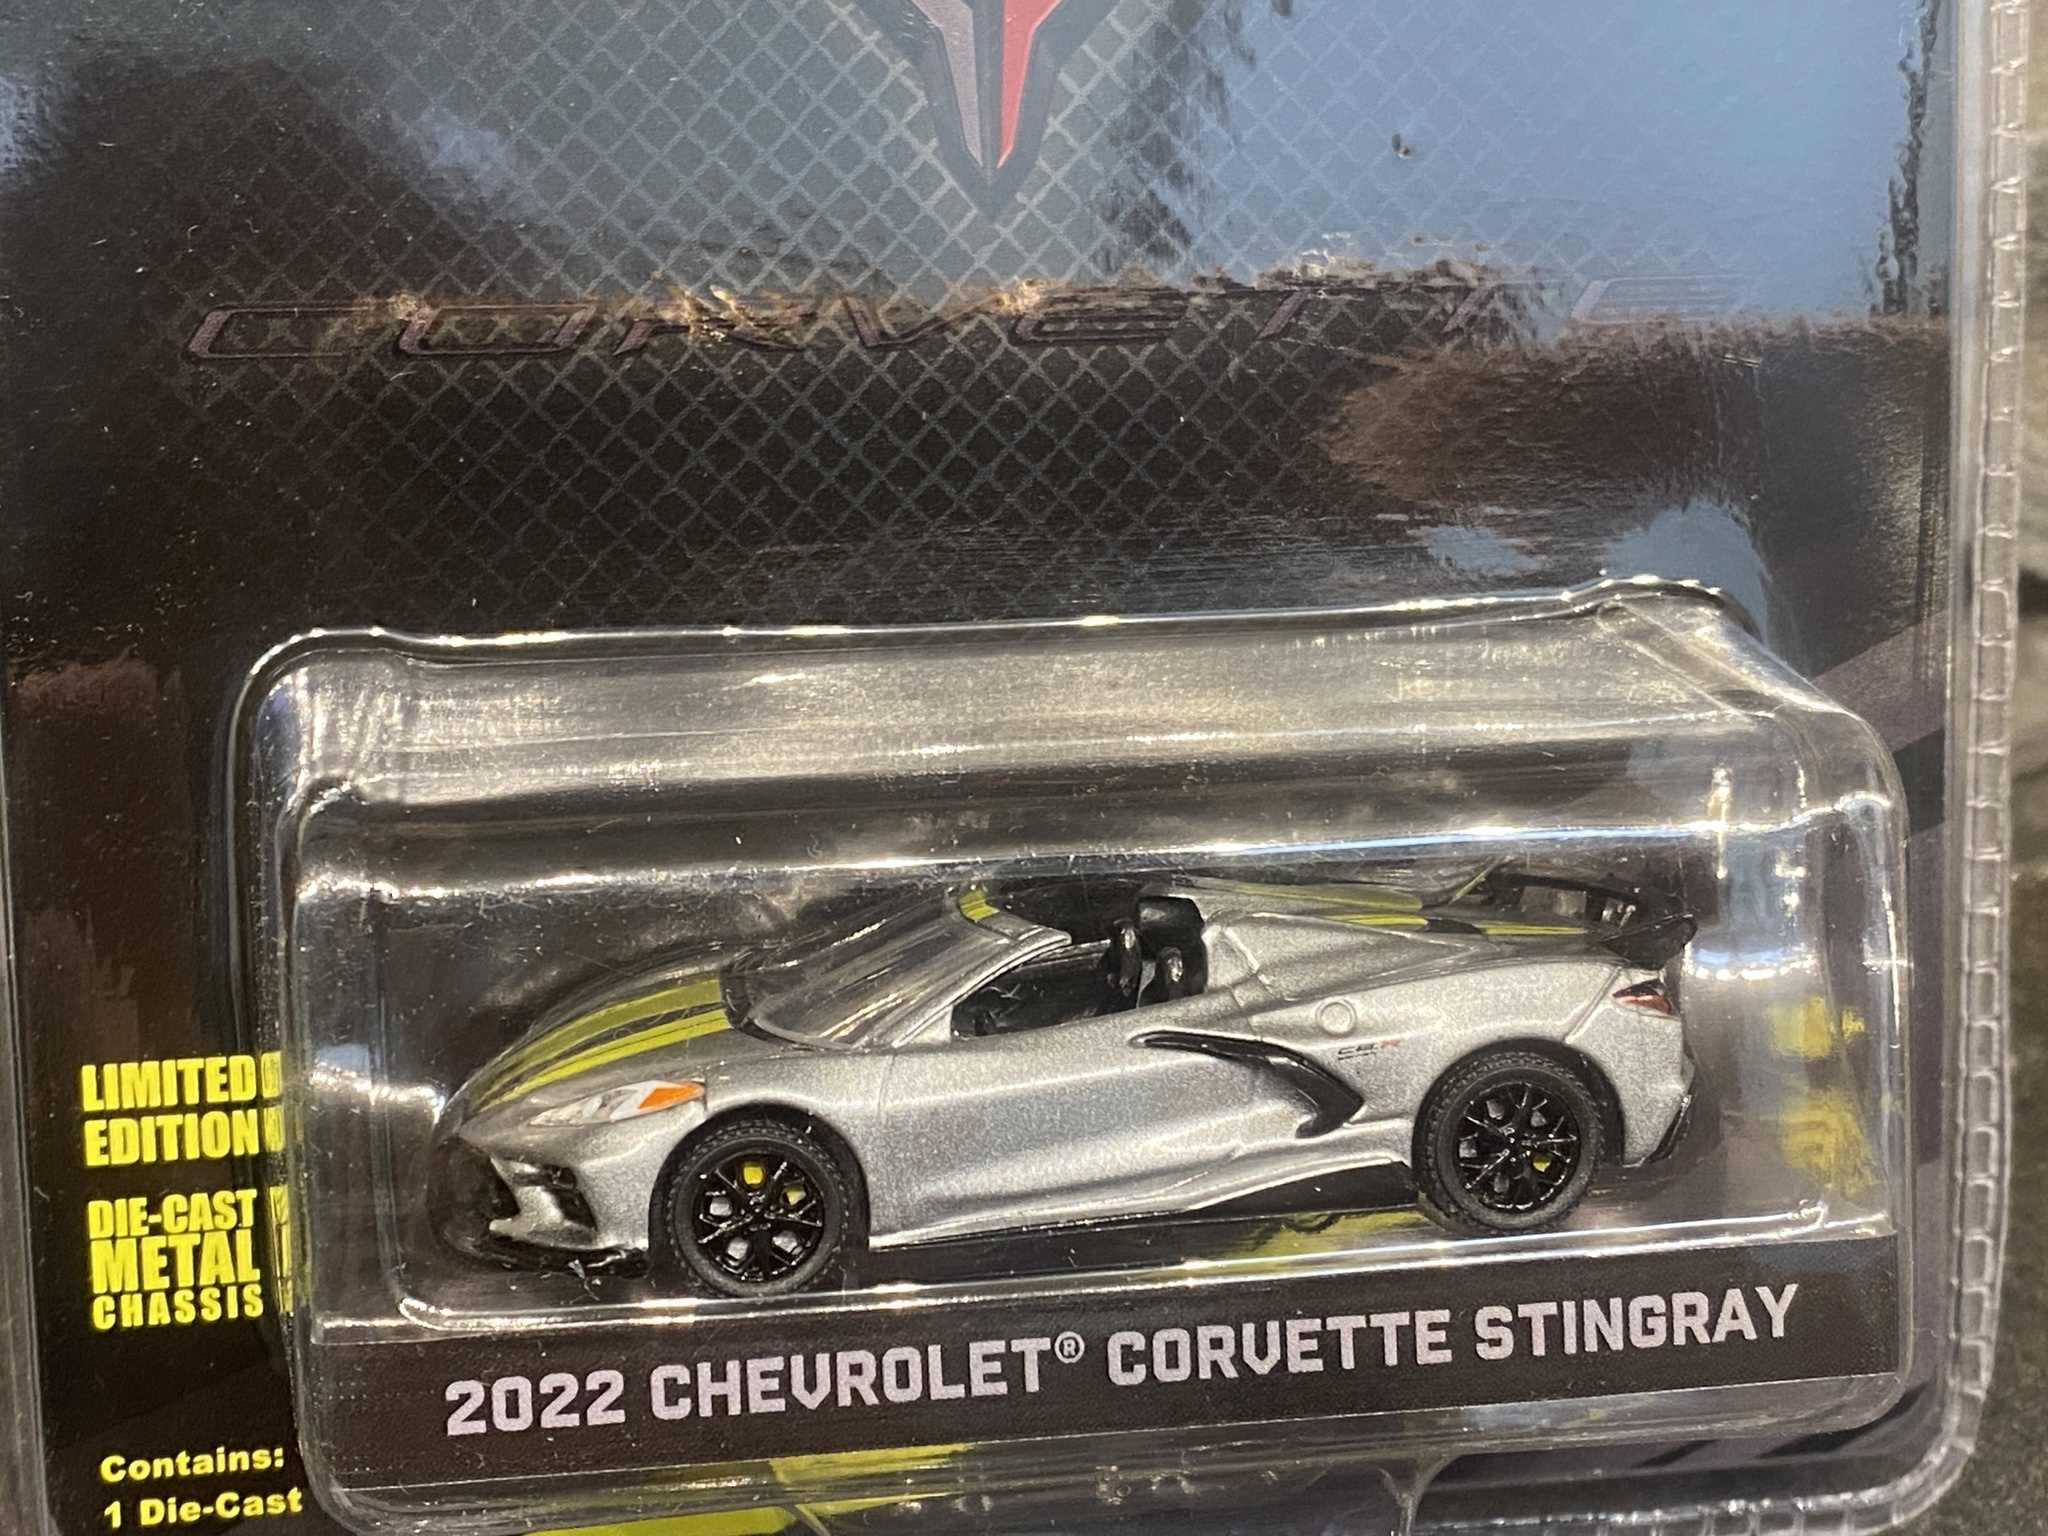 Skala 1/64 Chevrolet Corvette C8 Stingray 22', Silver fr Greenlight "Exclusive"